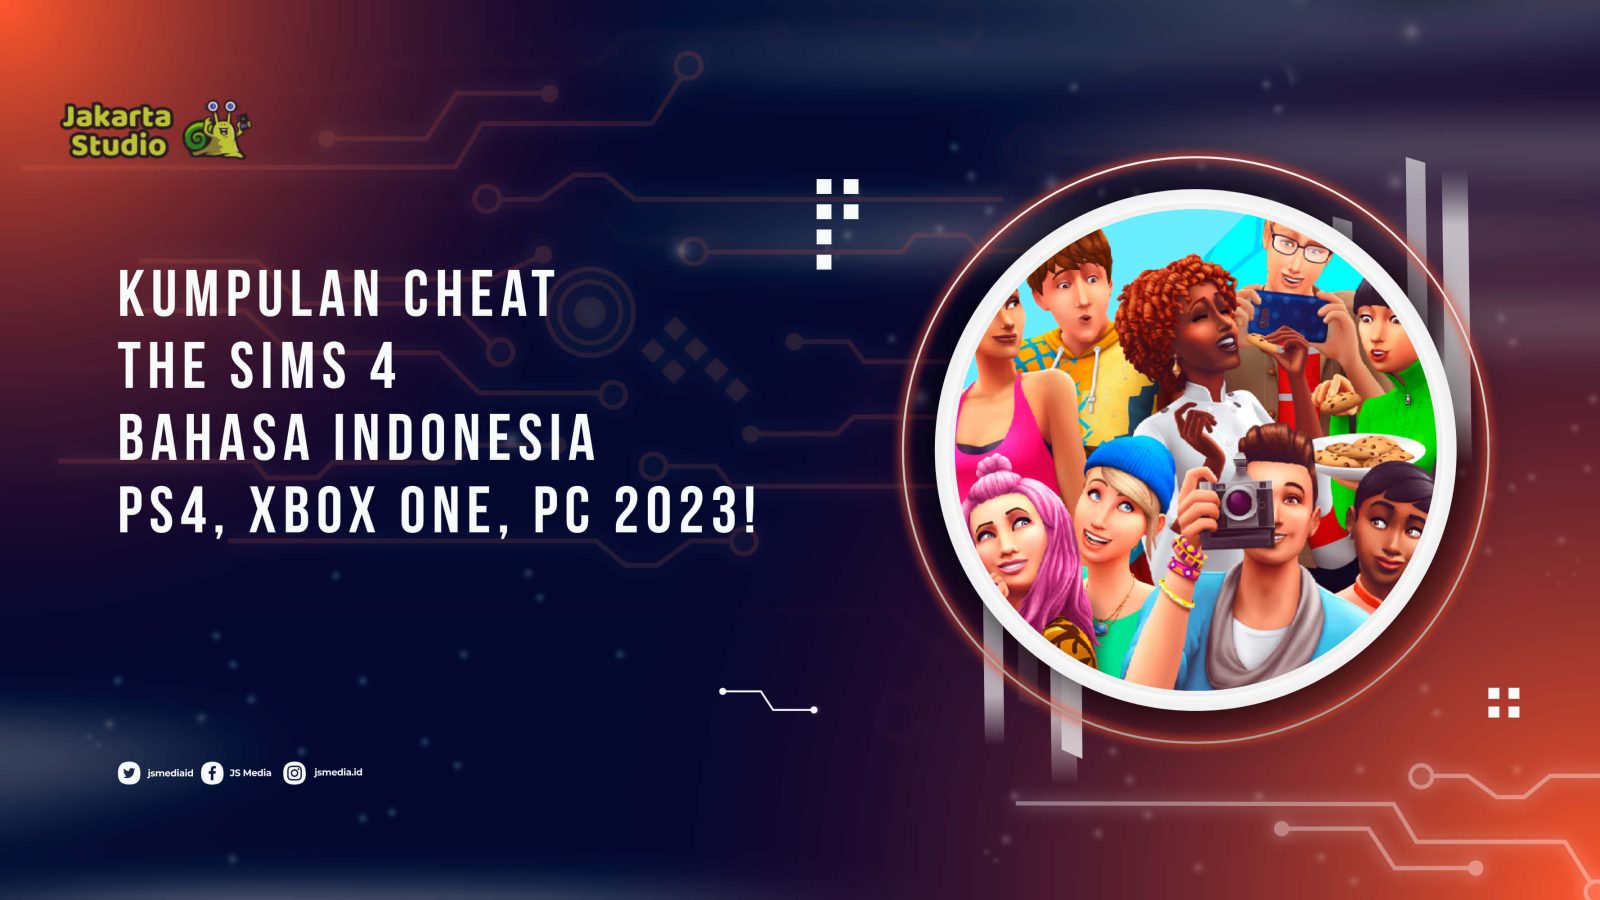 Kumpulan Cheat The Sims 4 Bahasa Indonesia